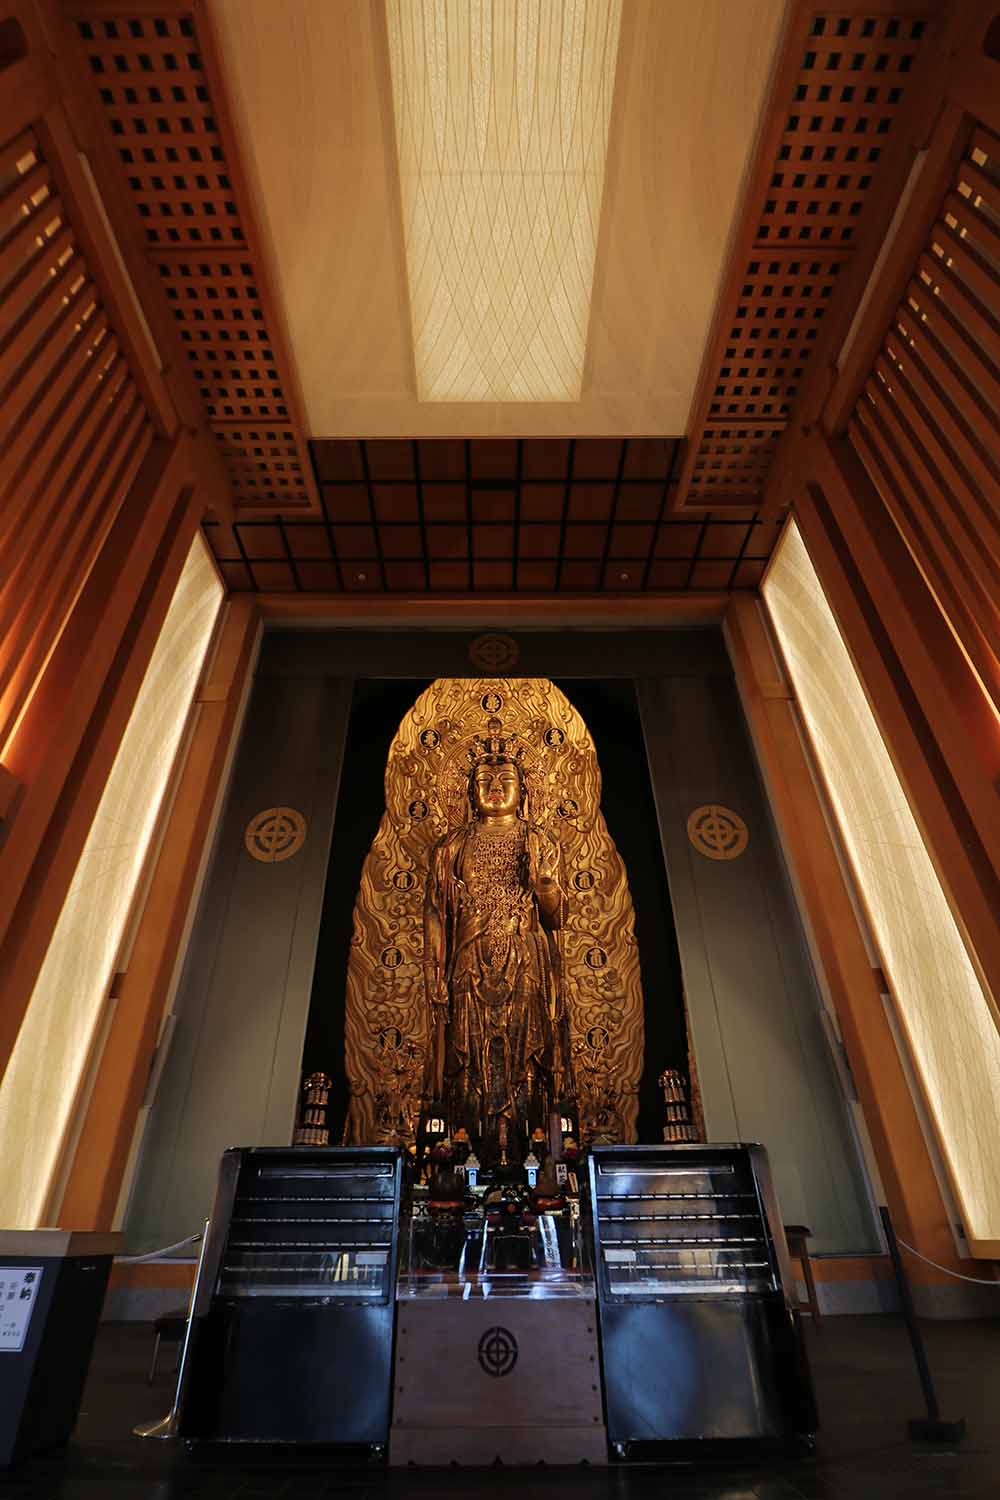 Hasedera Temple in Kamakura